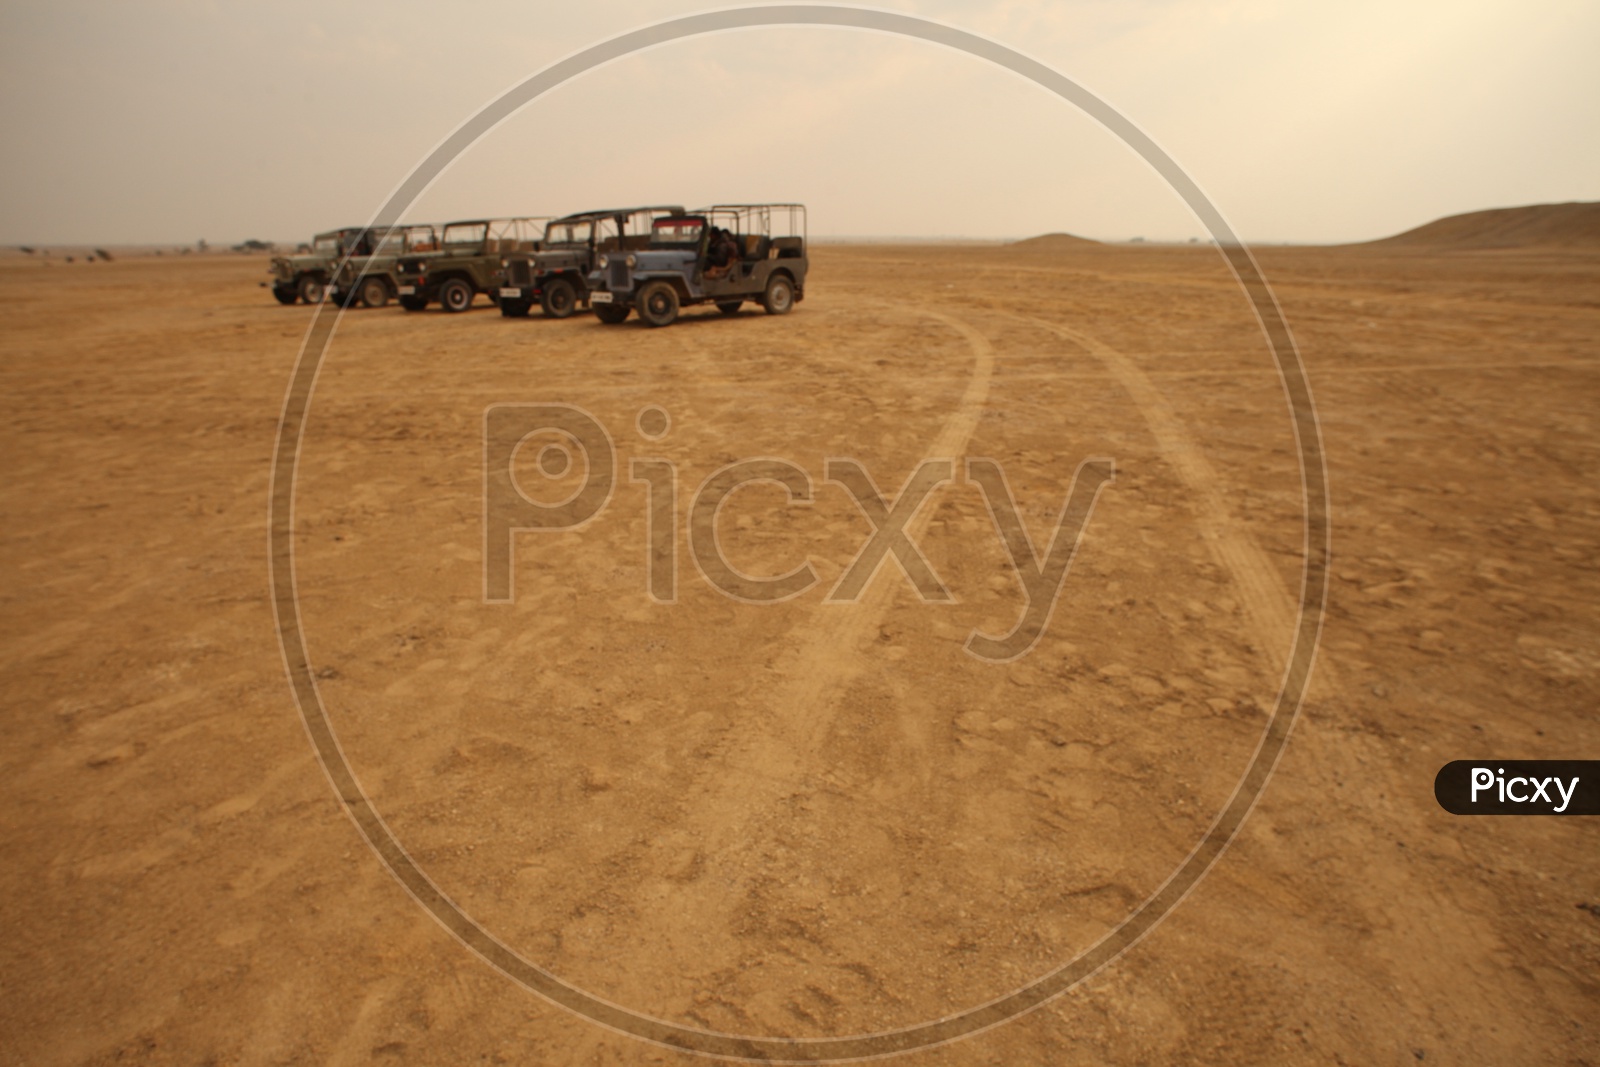 Vehicles parked in desert